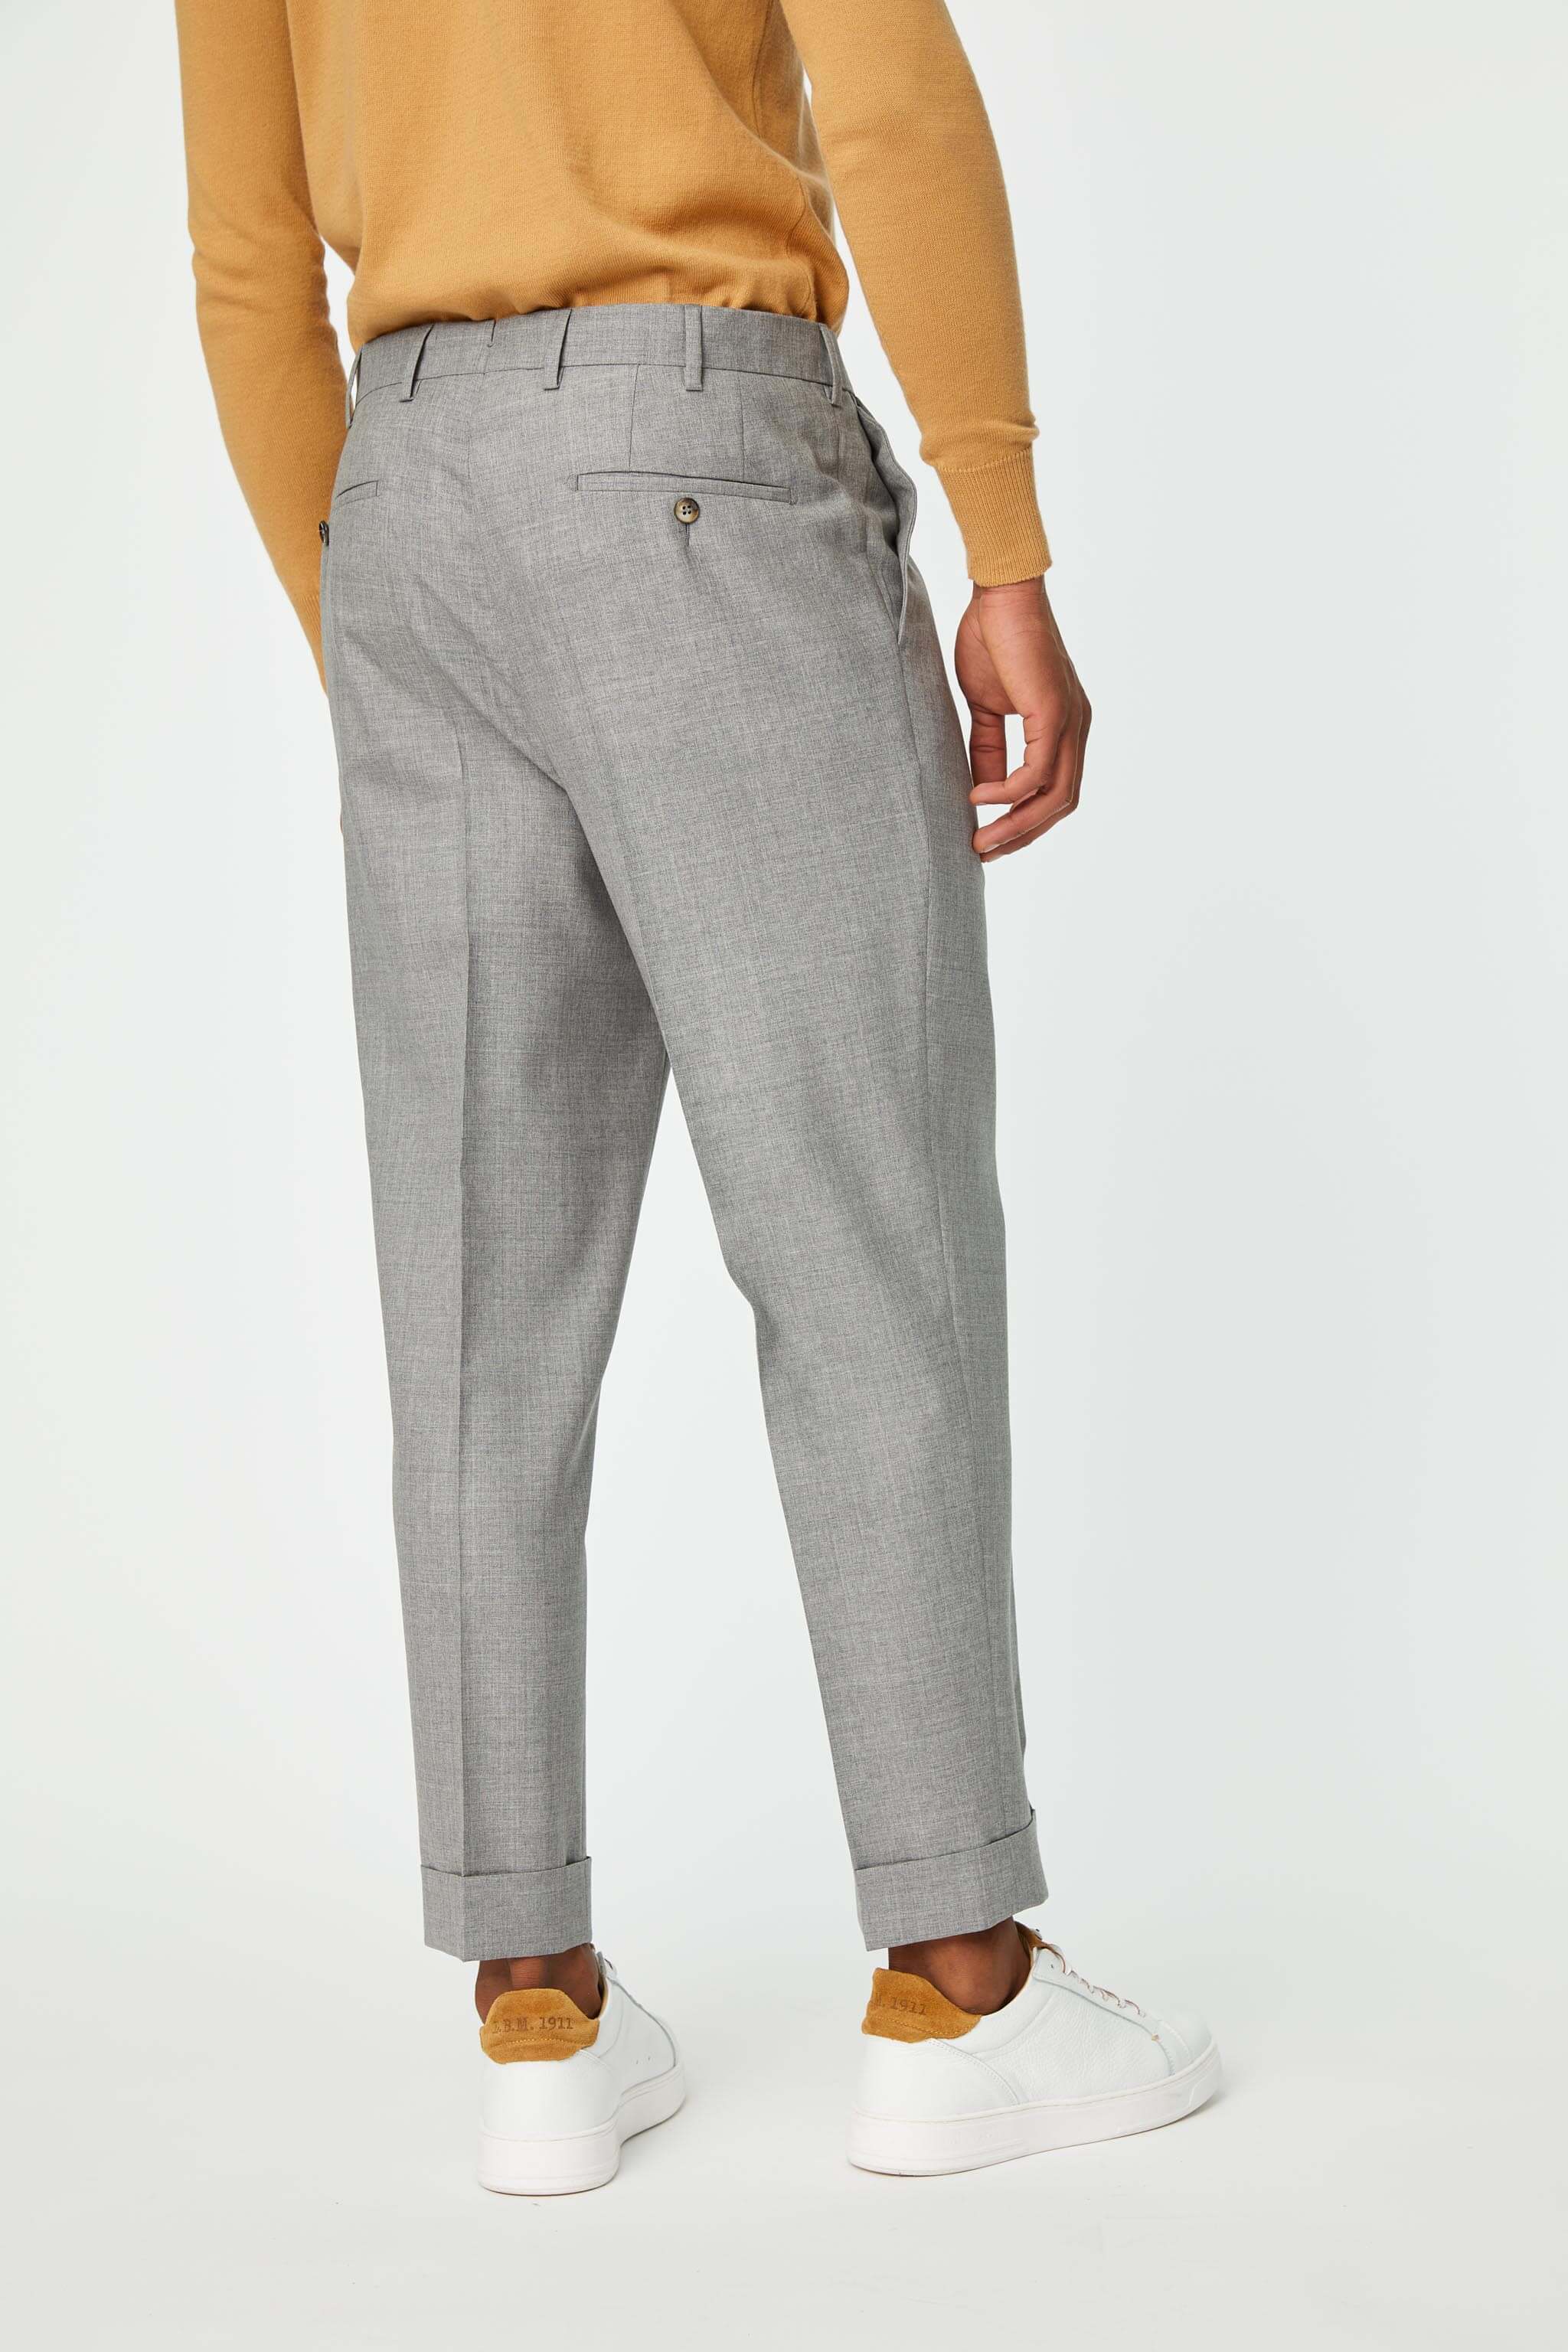 Gray MILES pants